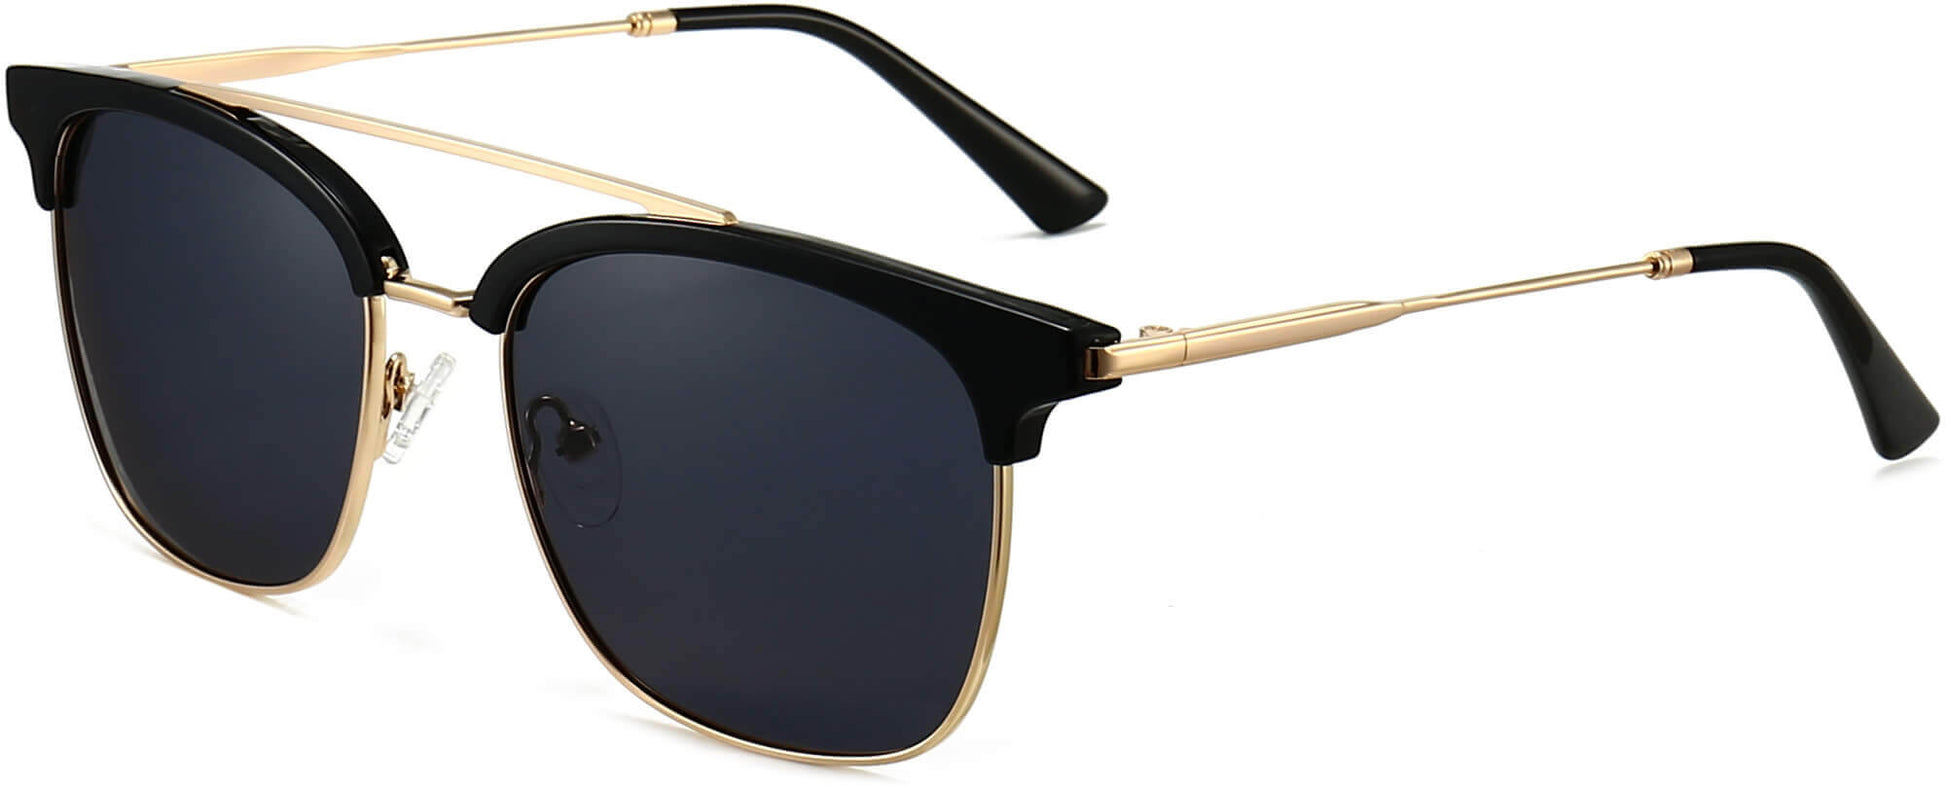 Ashton Black Plastic Sunglasses from ANRRI, angle view